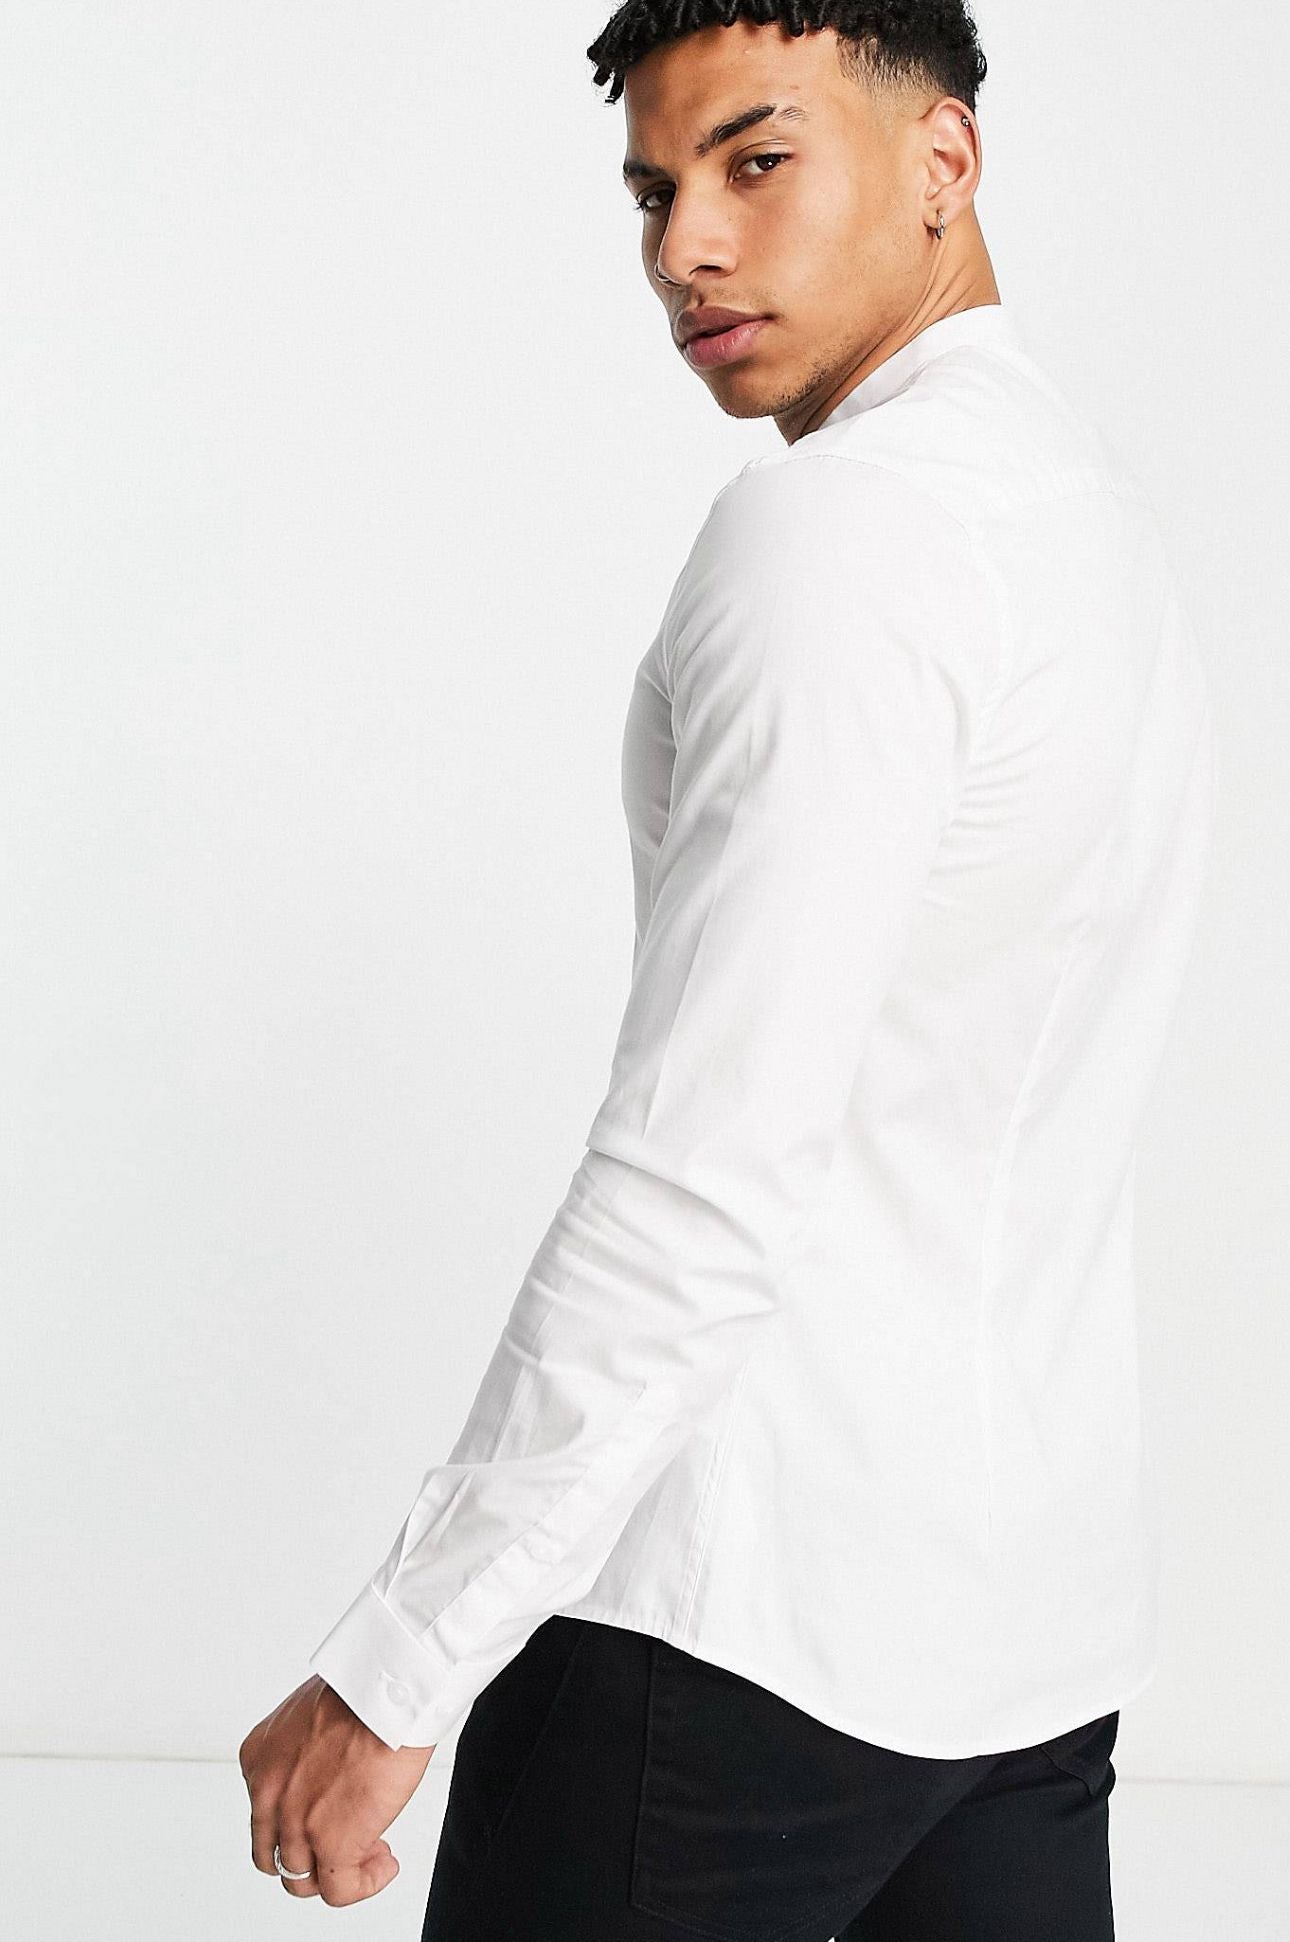 Camisa Asos Design original, color blanco hueso.